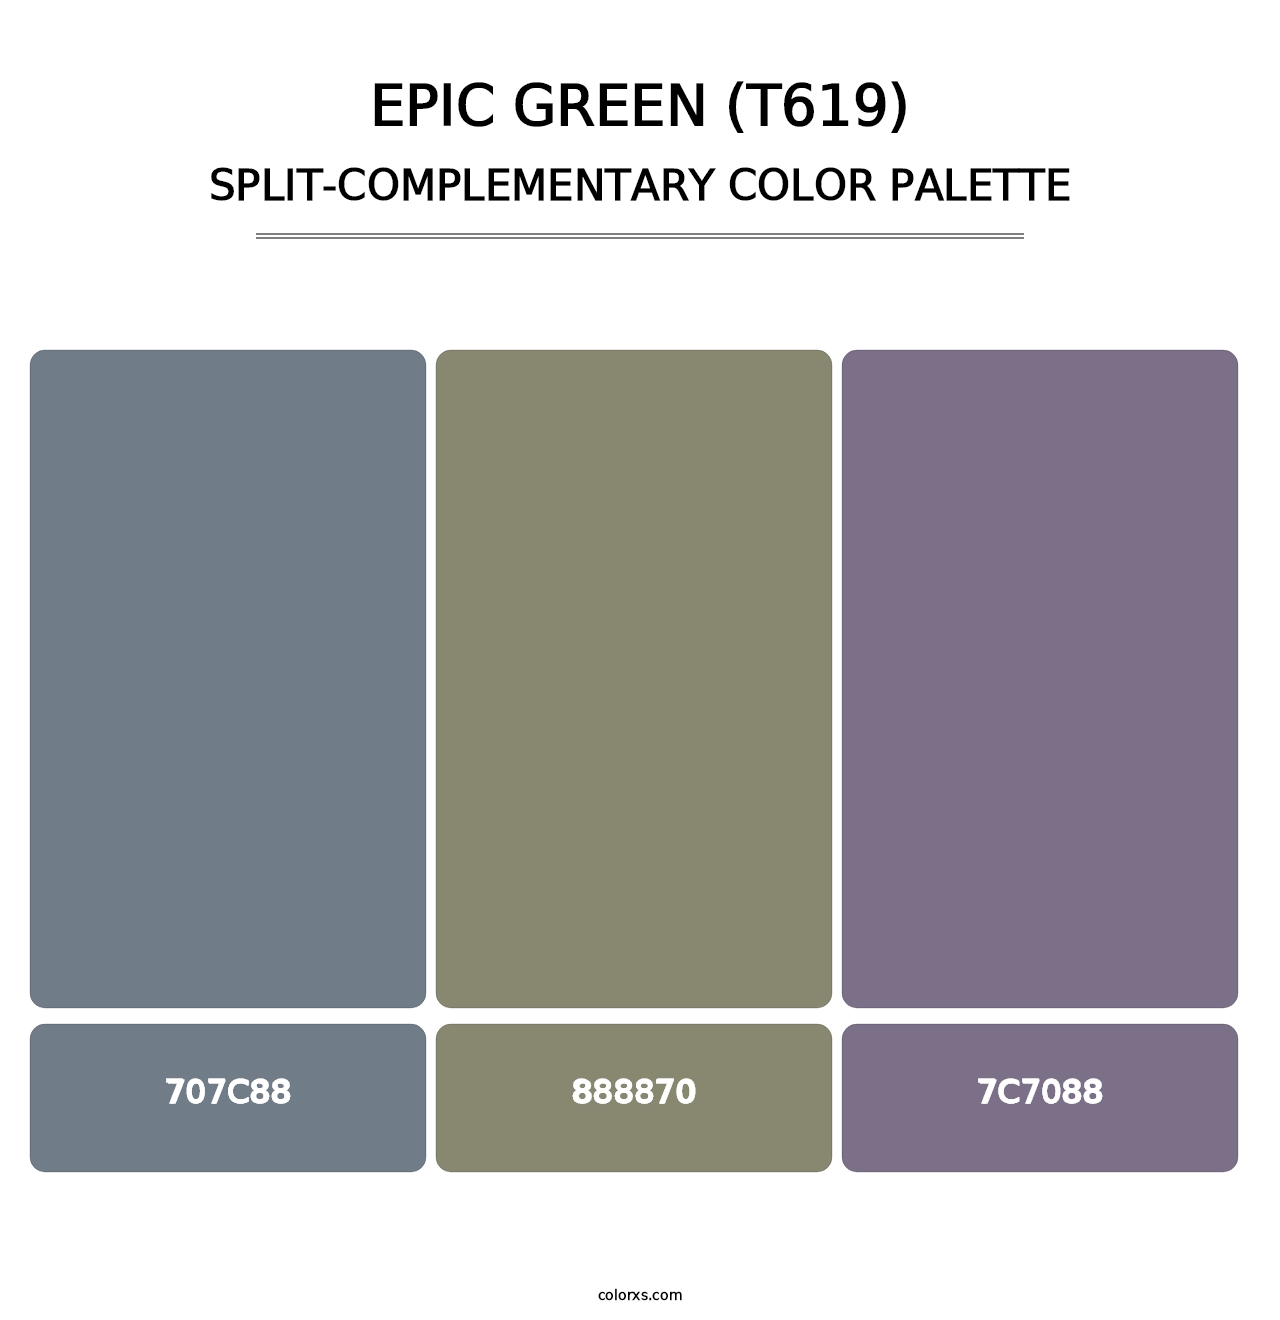 Epic Green (T619) - Split-Complementary Color Palette